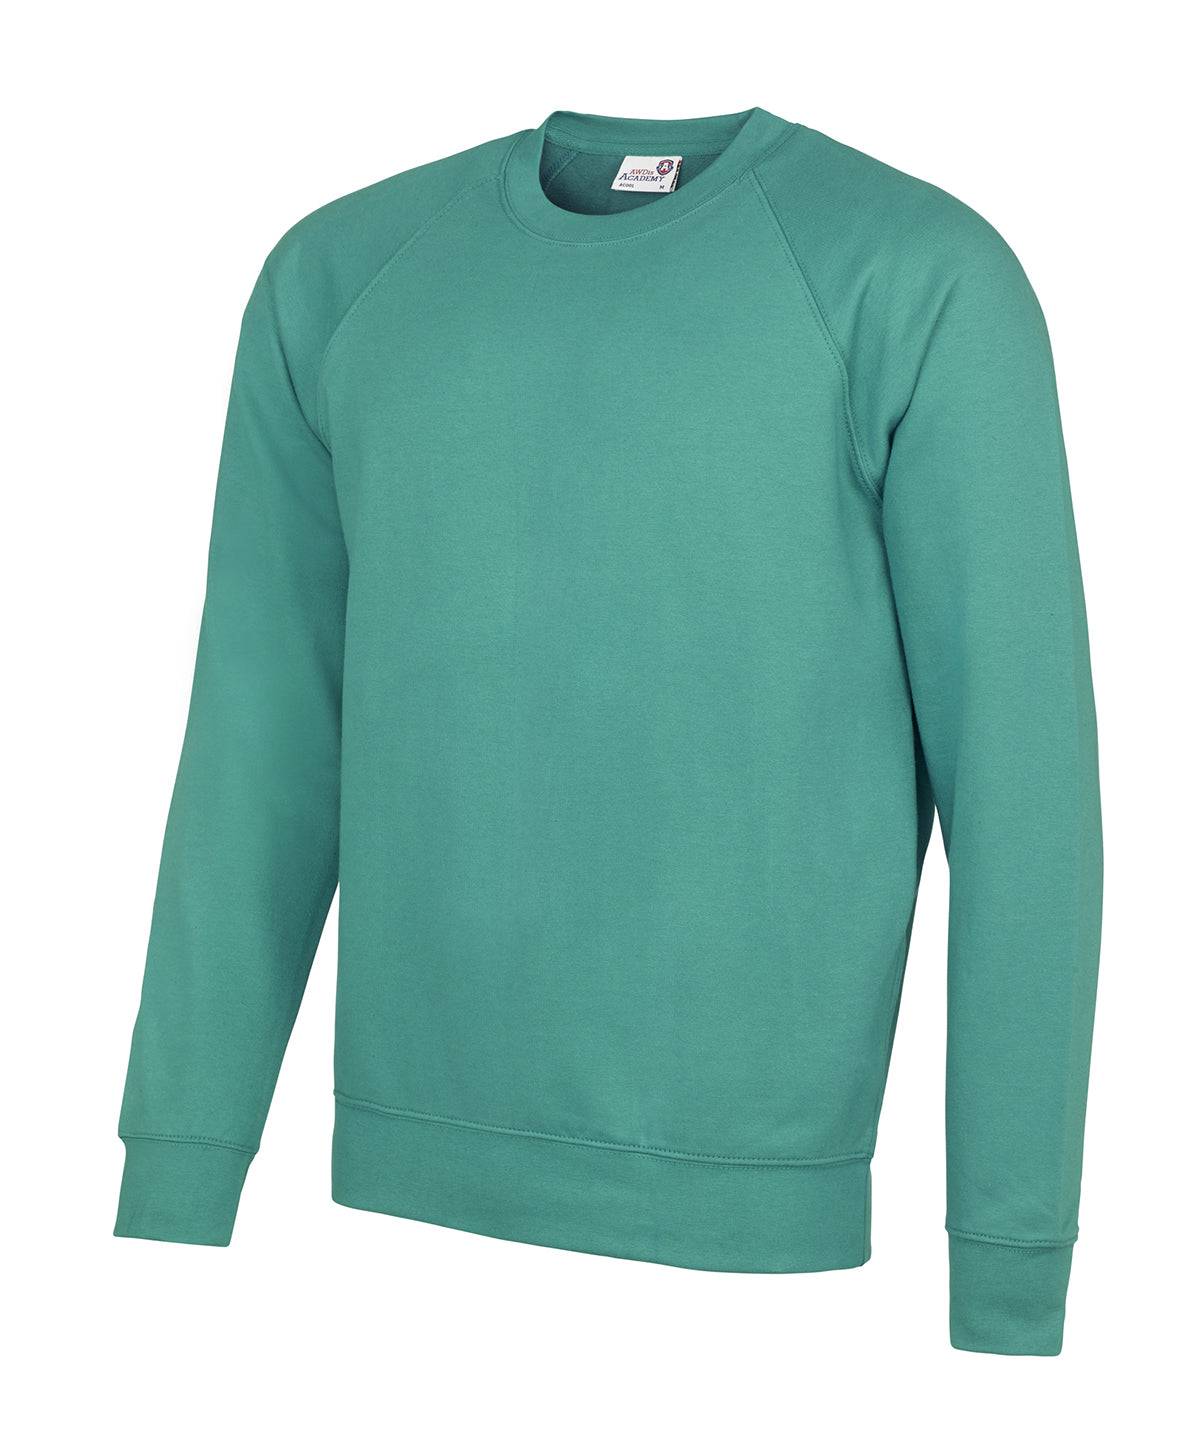 Academy Emerald - Senior Academy raglan sweatshirt